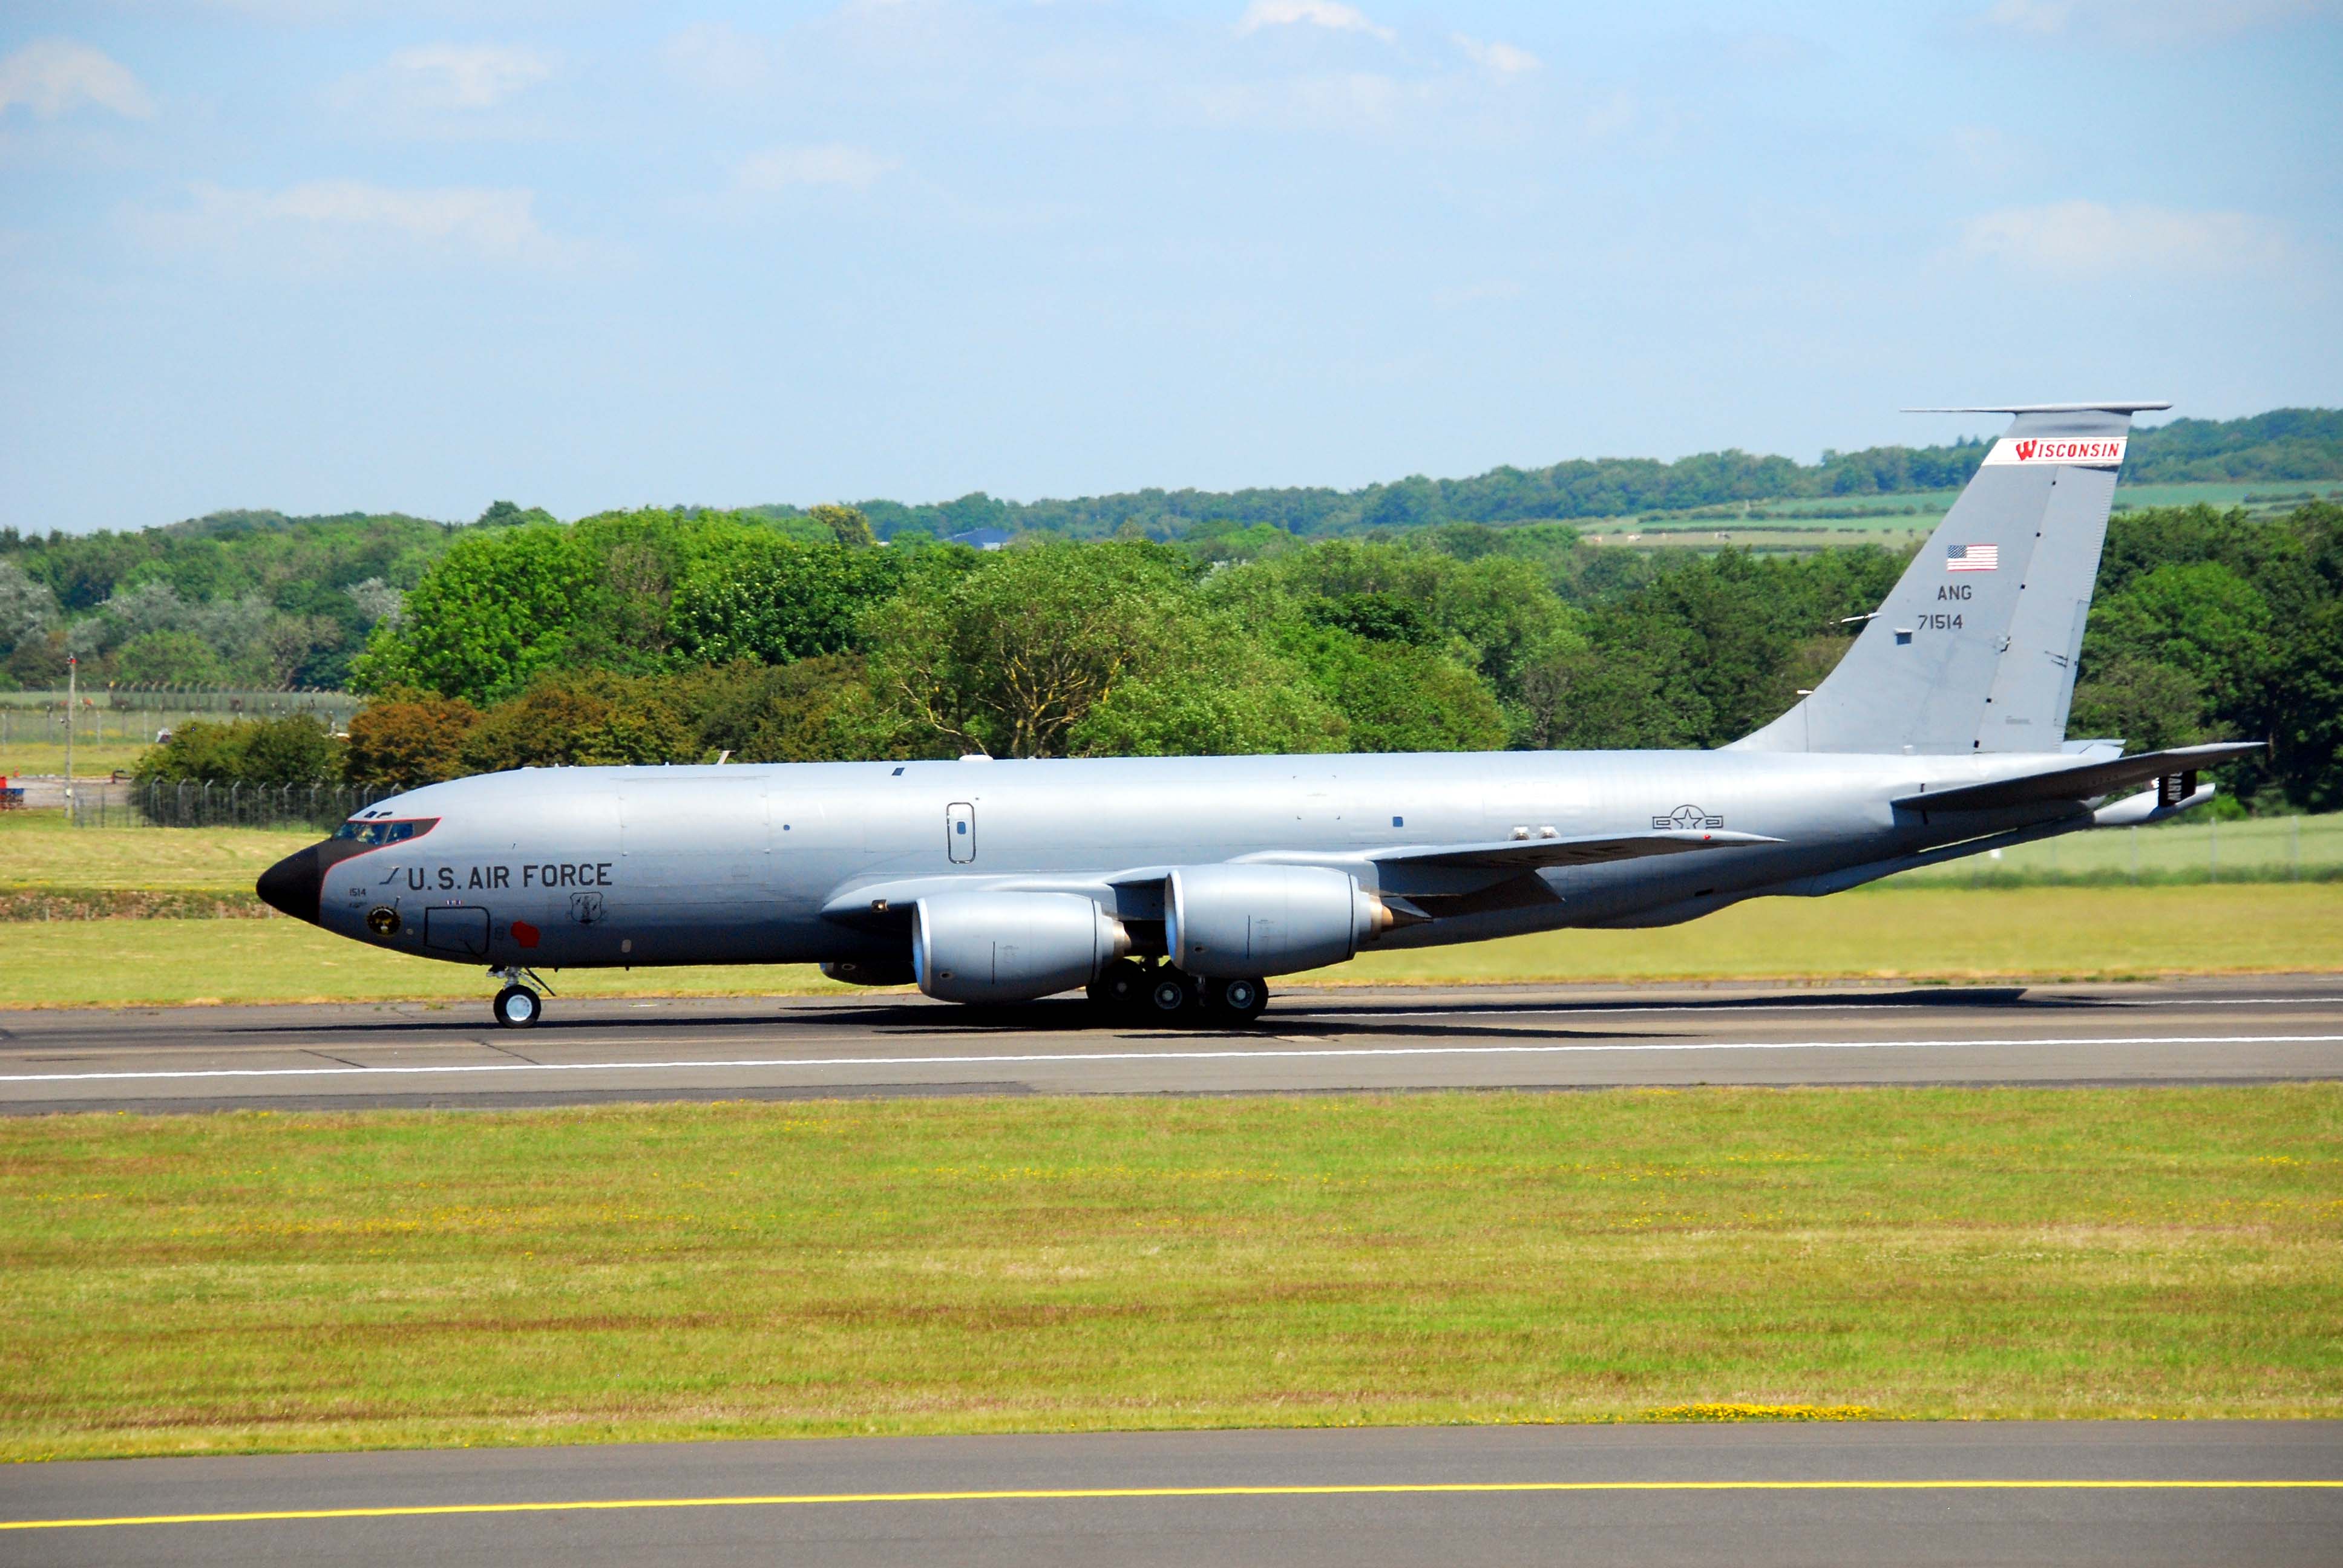 57-1514/571514 USAF - United States Air Force Boeing C-135 Stratotanker Airframe Information - AVSpotters.com